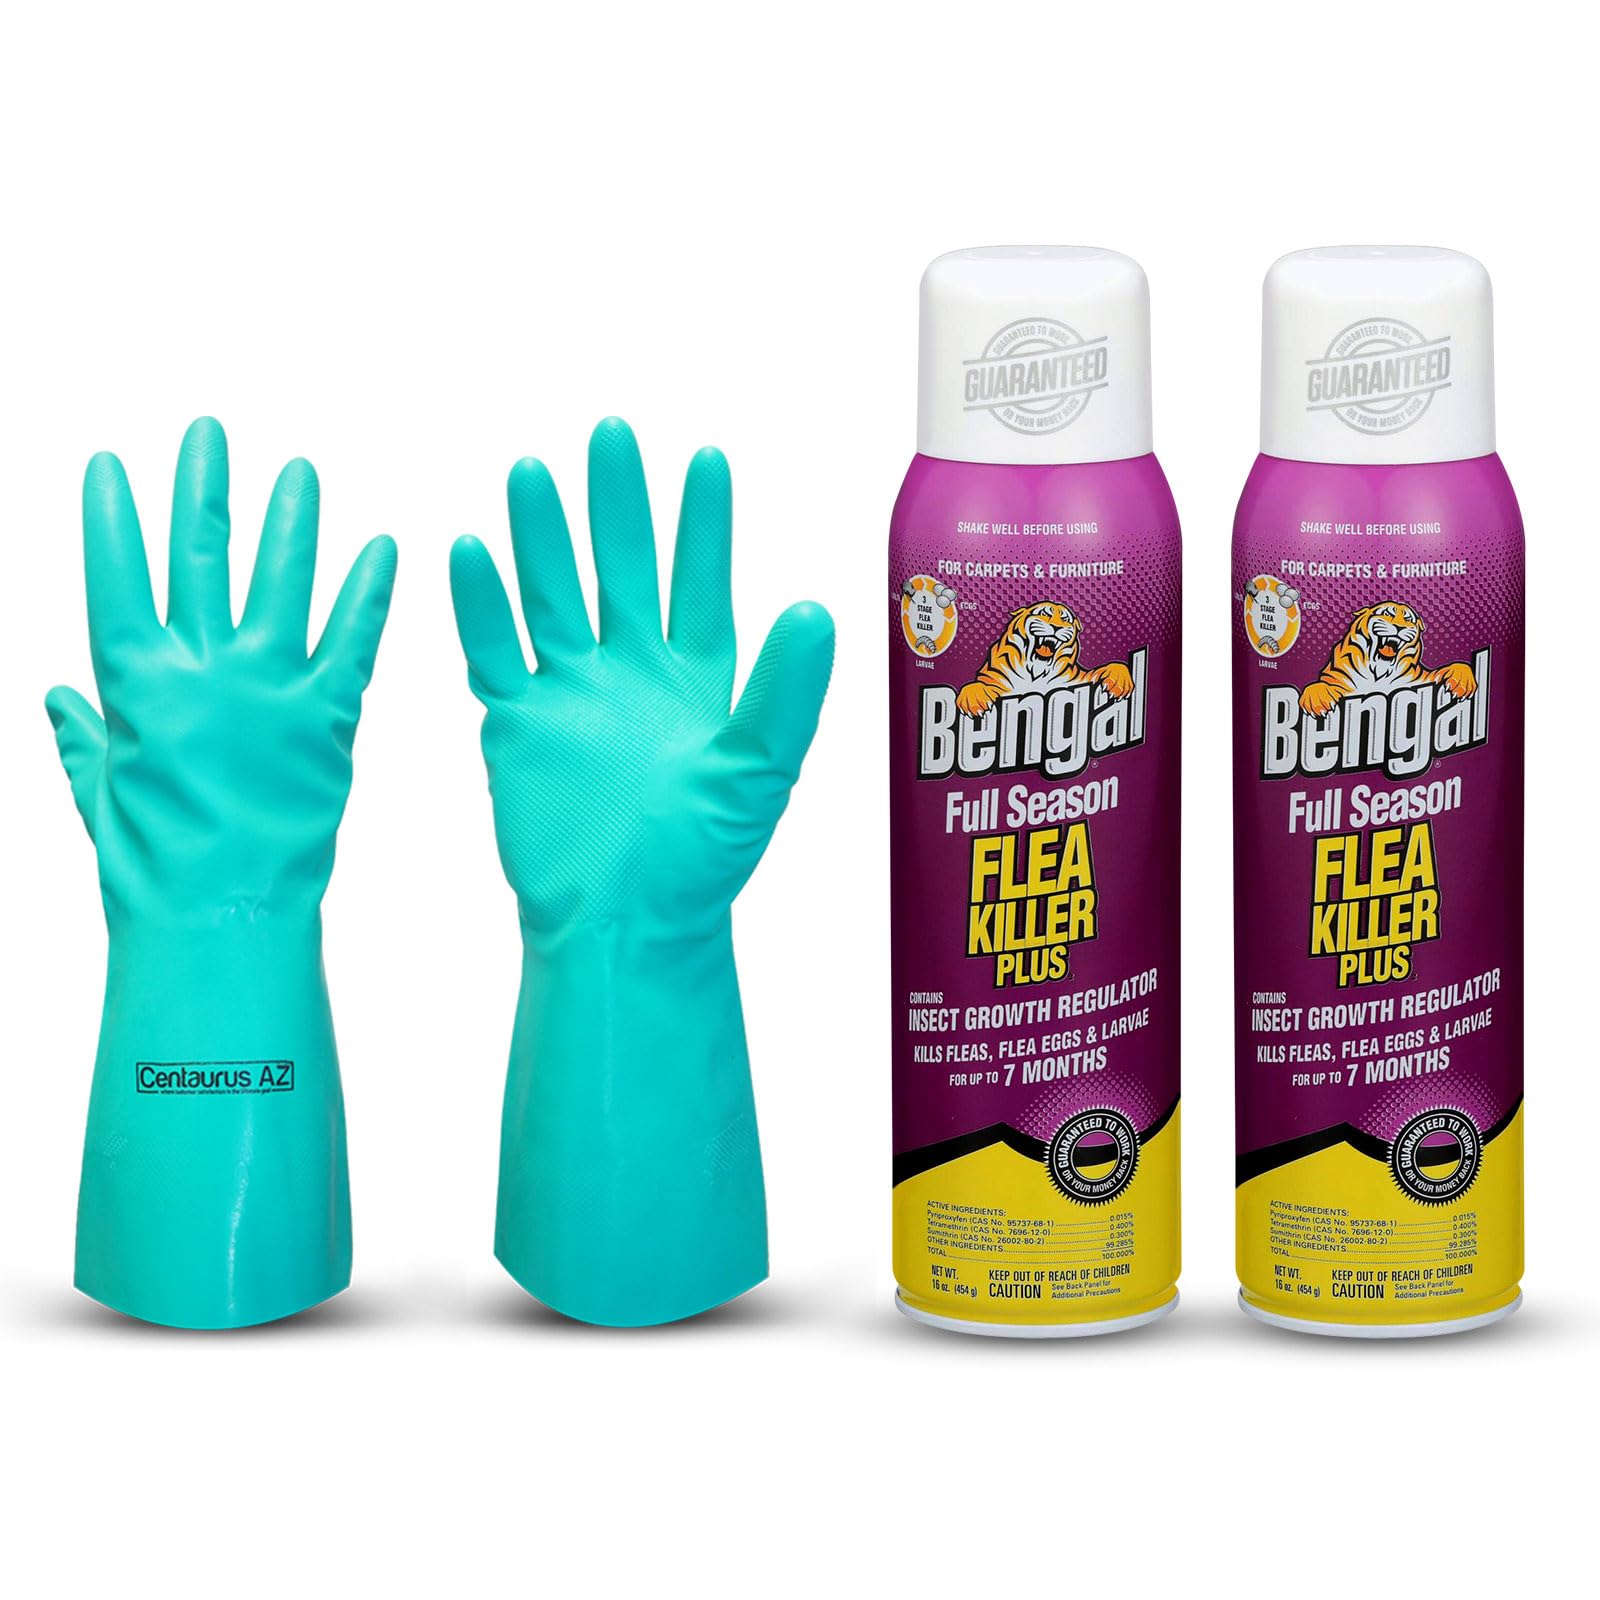 Bengal Full Season Flea Killer Plus- flea Bombs for Home Kills Eggs pet Safe fogger- flea Killer for Carpet Furniture- flea and tick Spray- Available with Premium Quality Centaurus AZ Gloves- 2pack